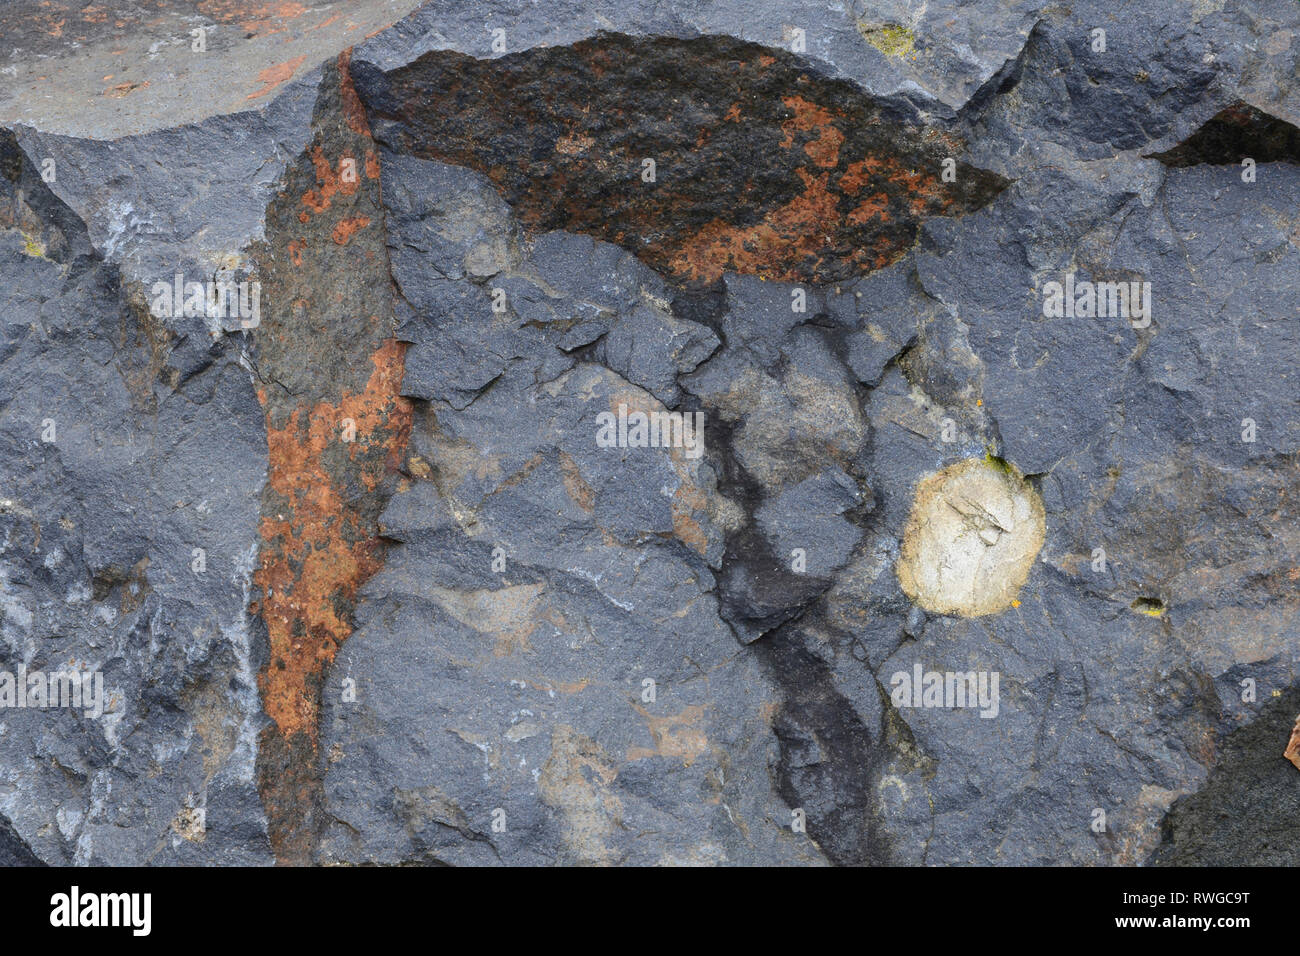 The basalt pit Bauersberg. Rhoen, Bavaria, Germany. Basalt rock of blue-gray color with characteristic stress cracks Stock Photo